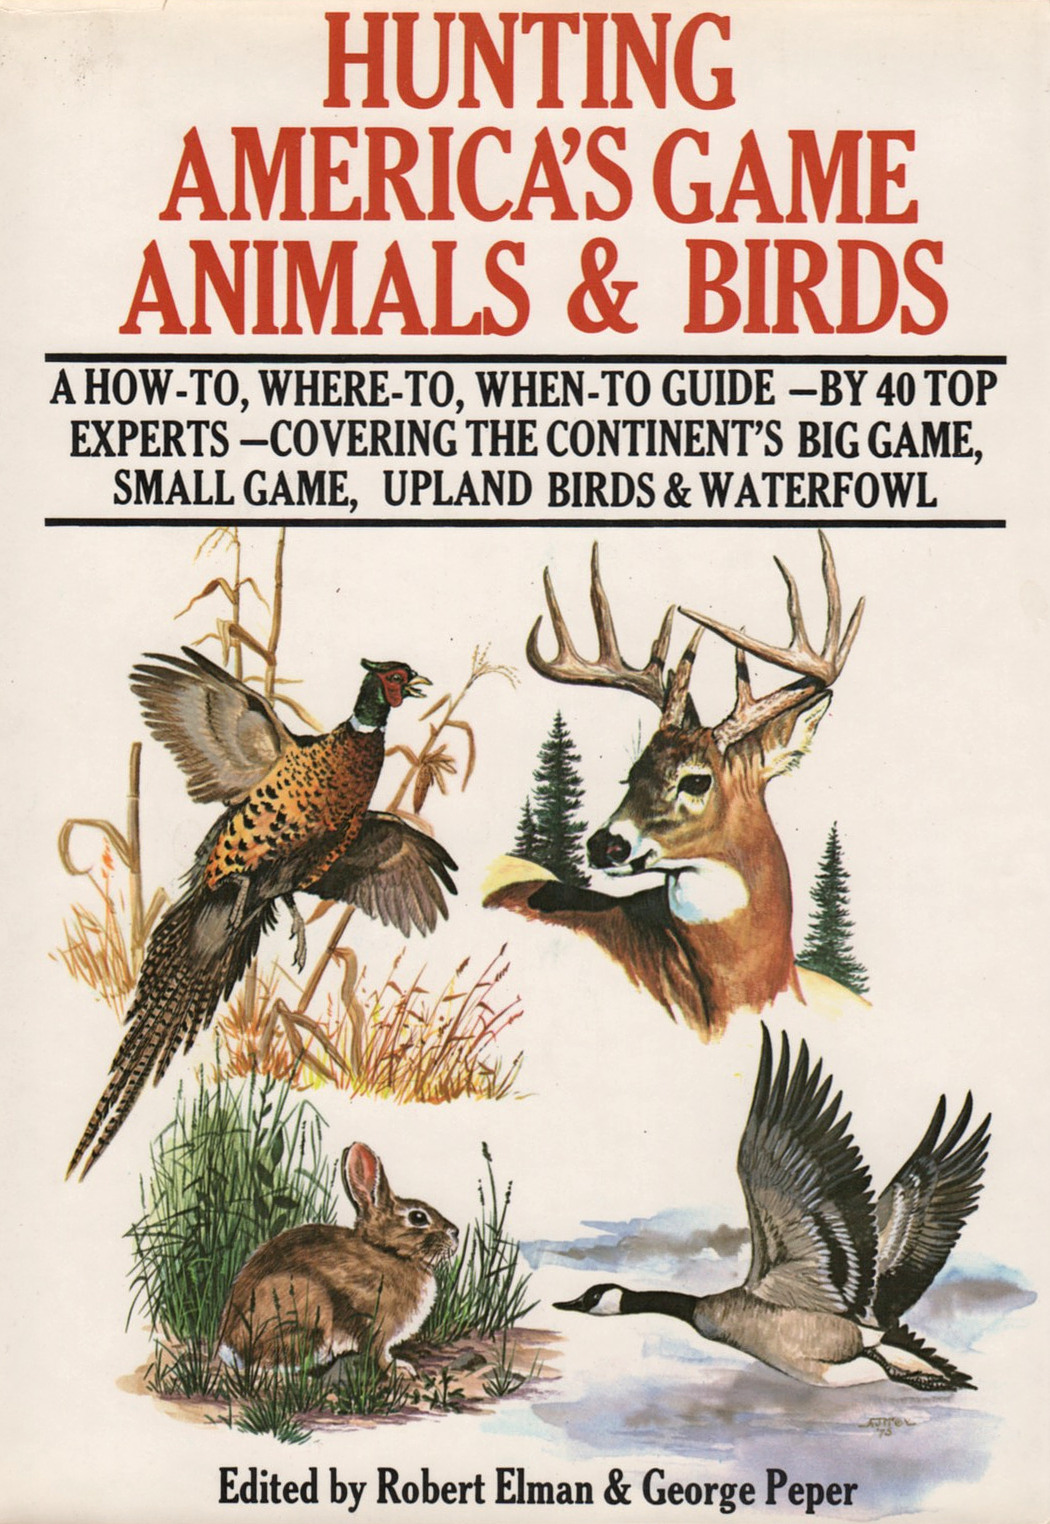 Hunting America's Game Animals & Birds (Elman & Peper)